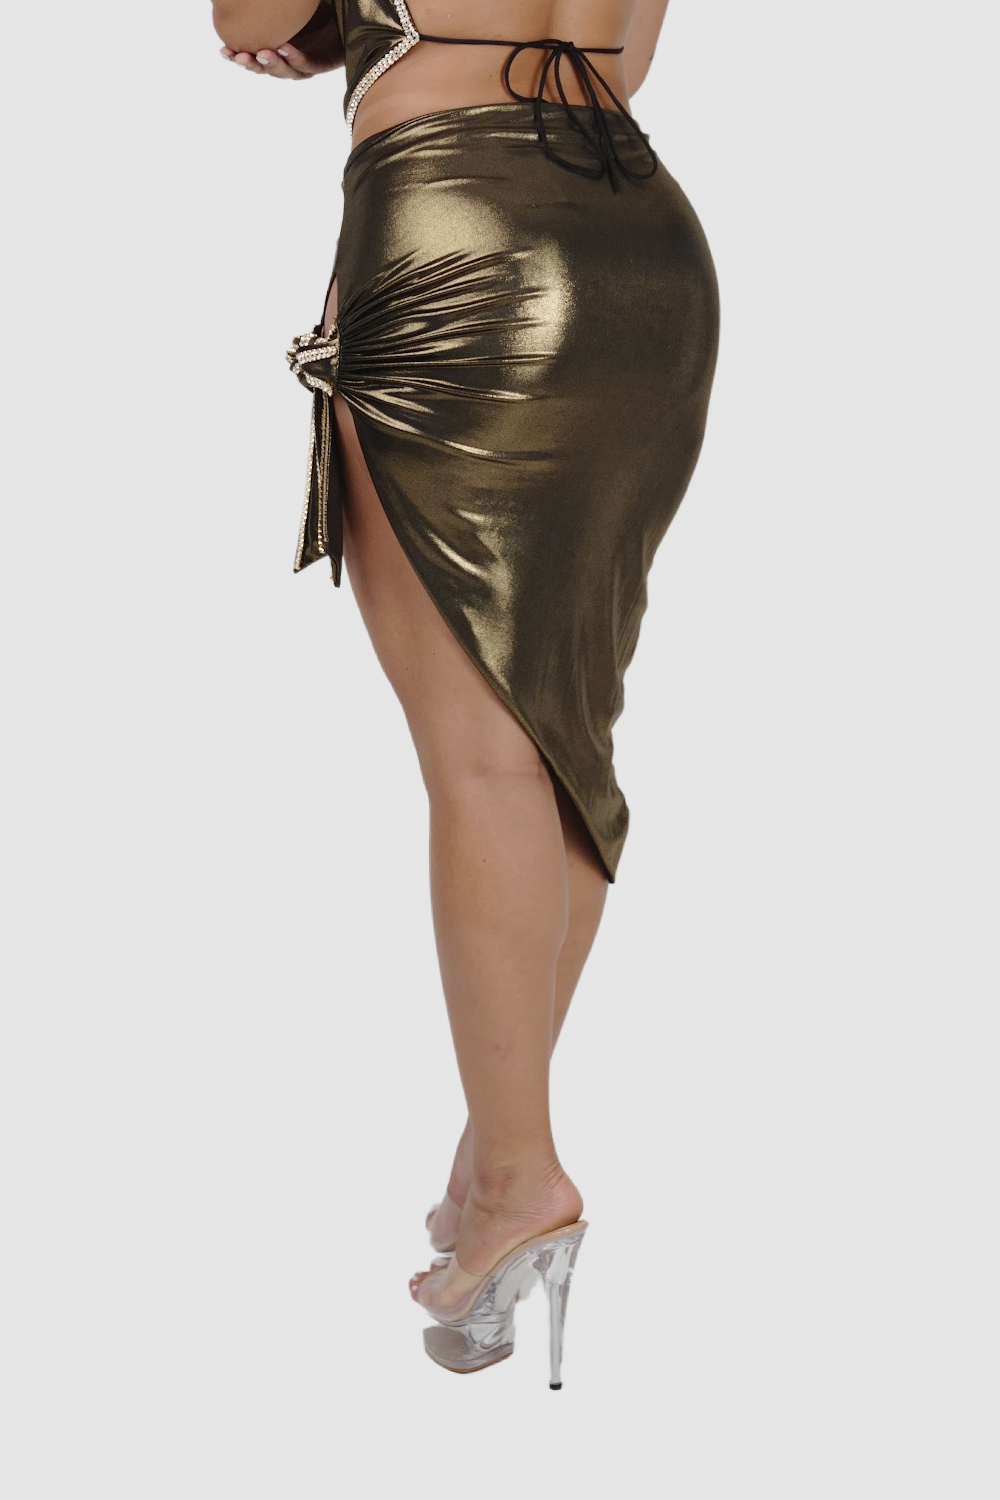 Vie Sauvage Lolita Metallic Gold W Gold Skirt